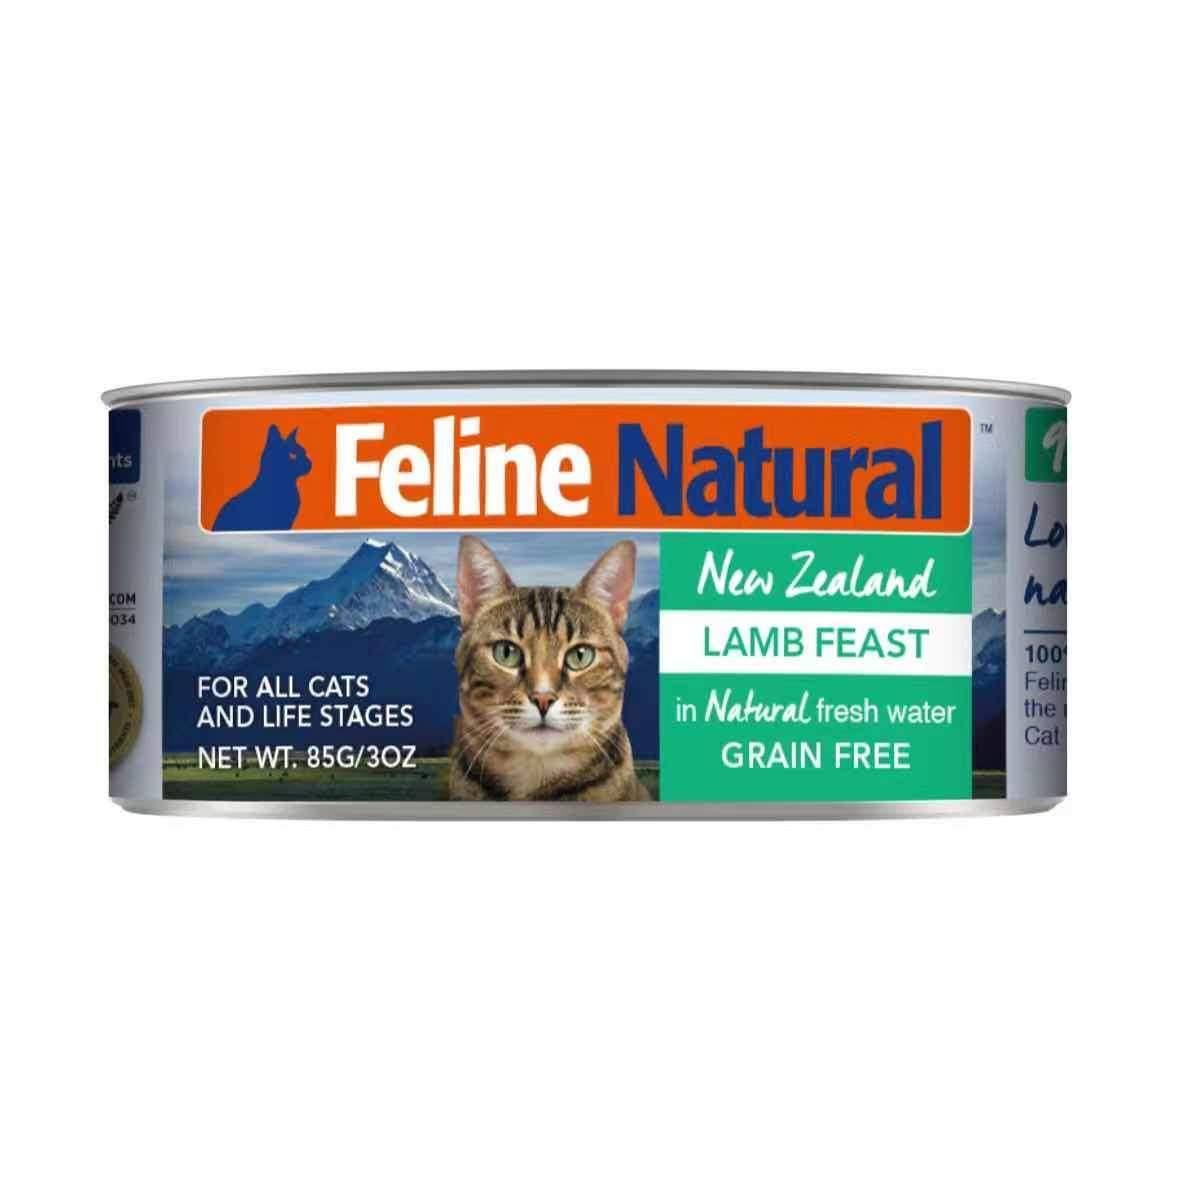 Feline Natural Lamb Feast Cats Food Pack - 24pk, 170g